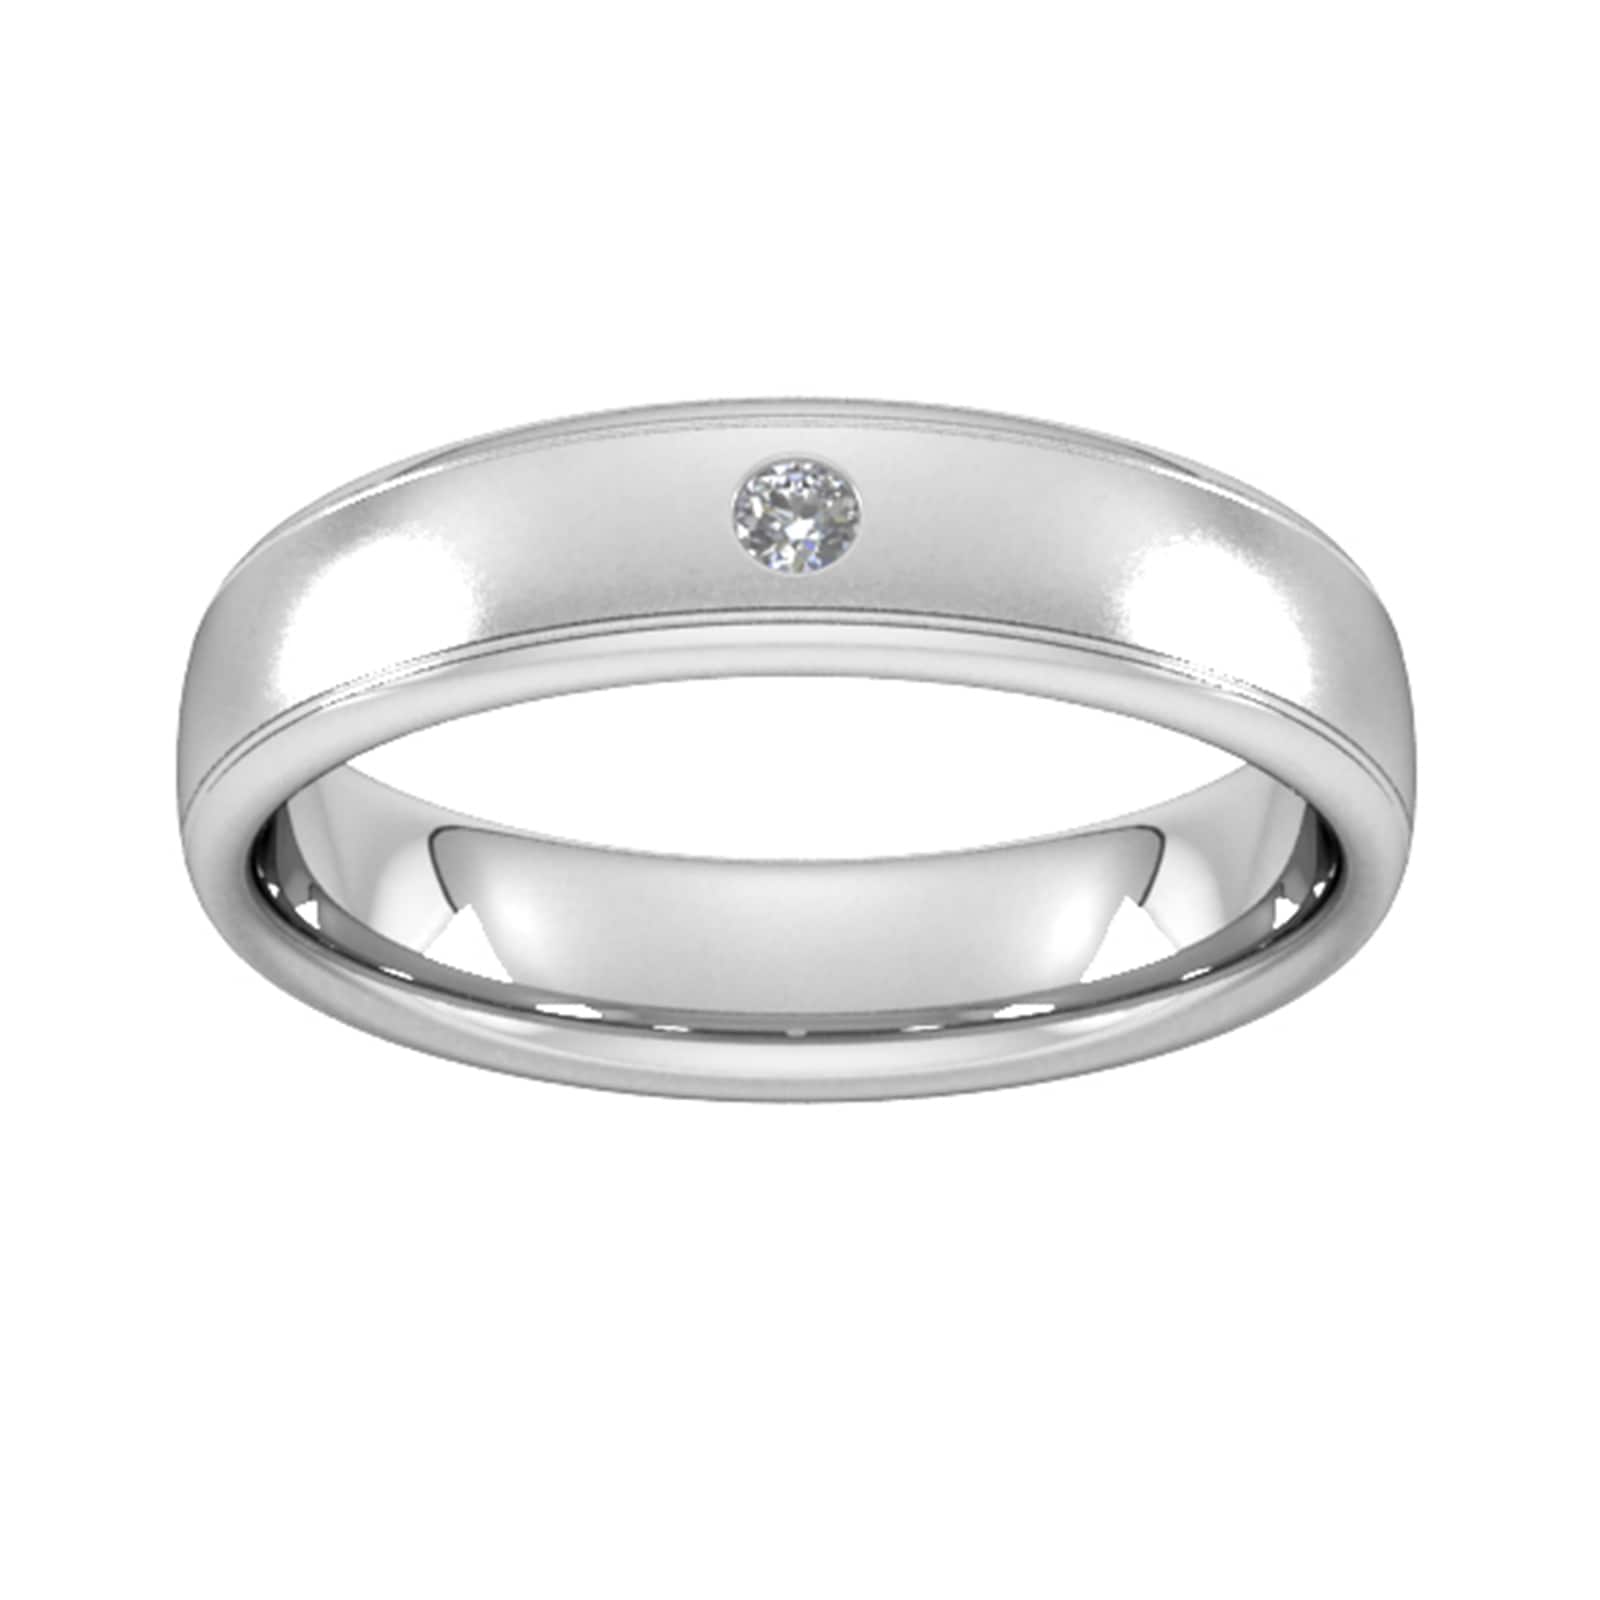 5mm Brilliant Cut Diamond Set Wedding Ring In 9 Carat White Gold - Ring Size L